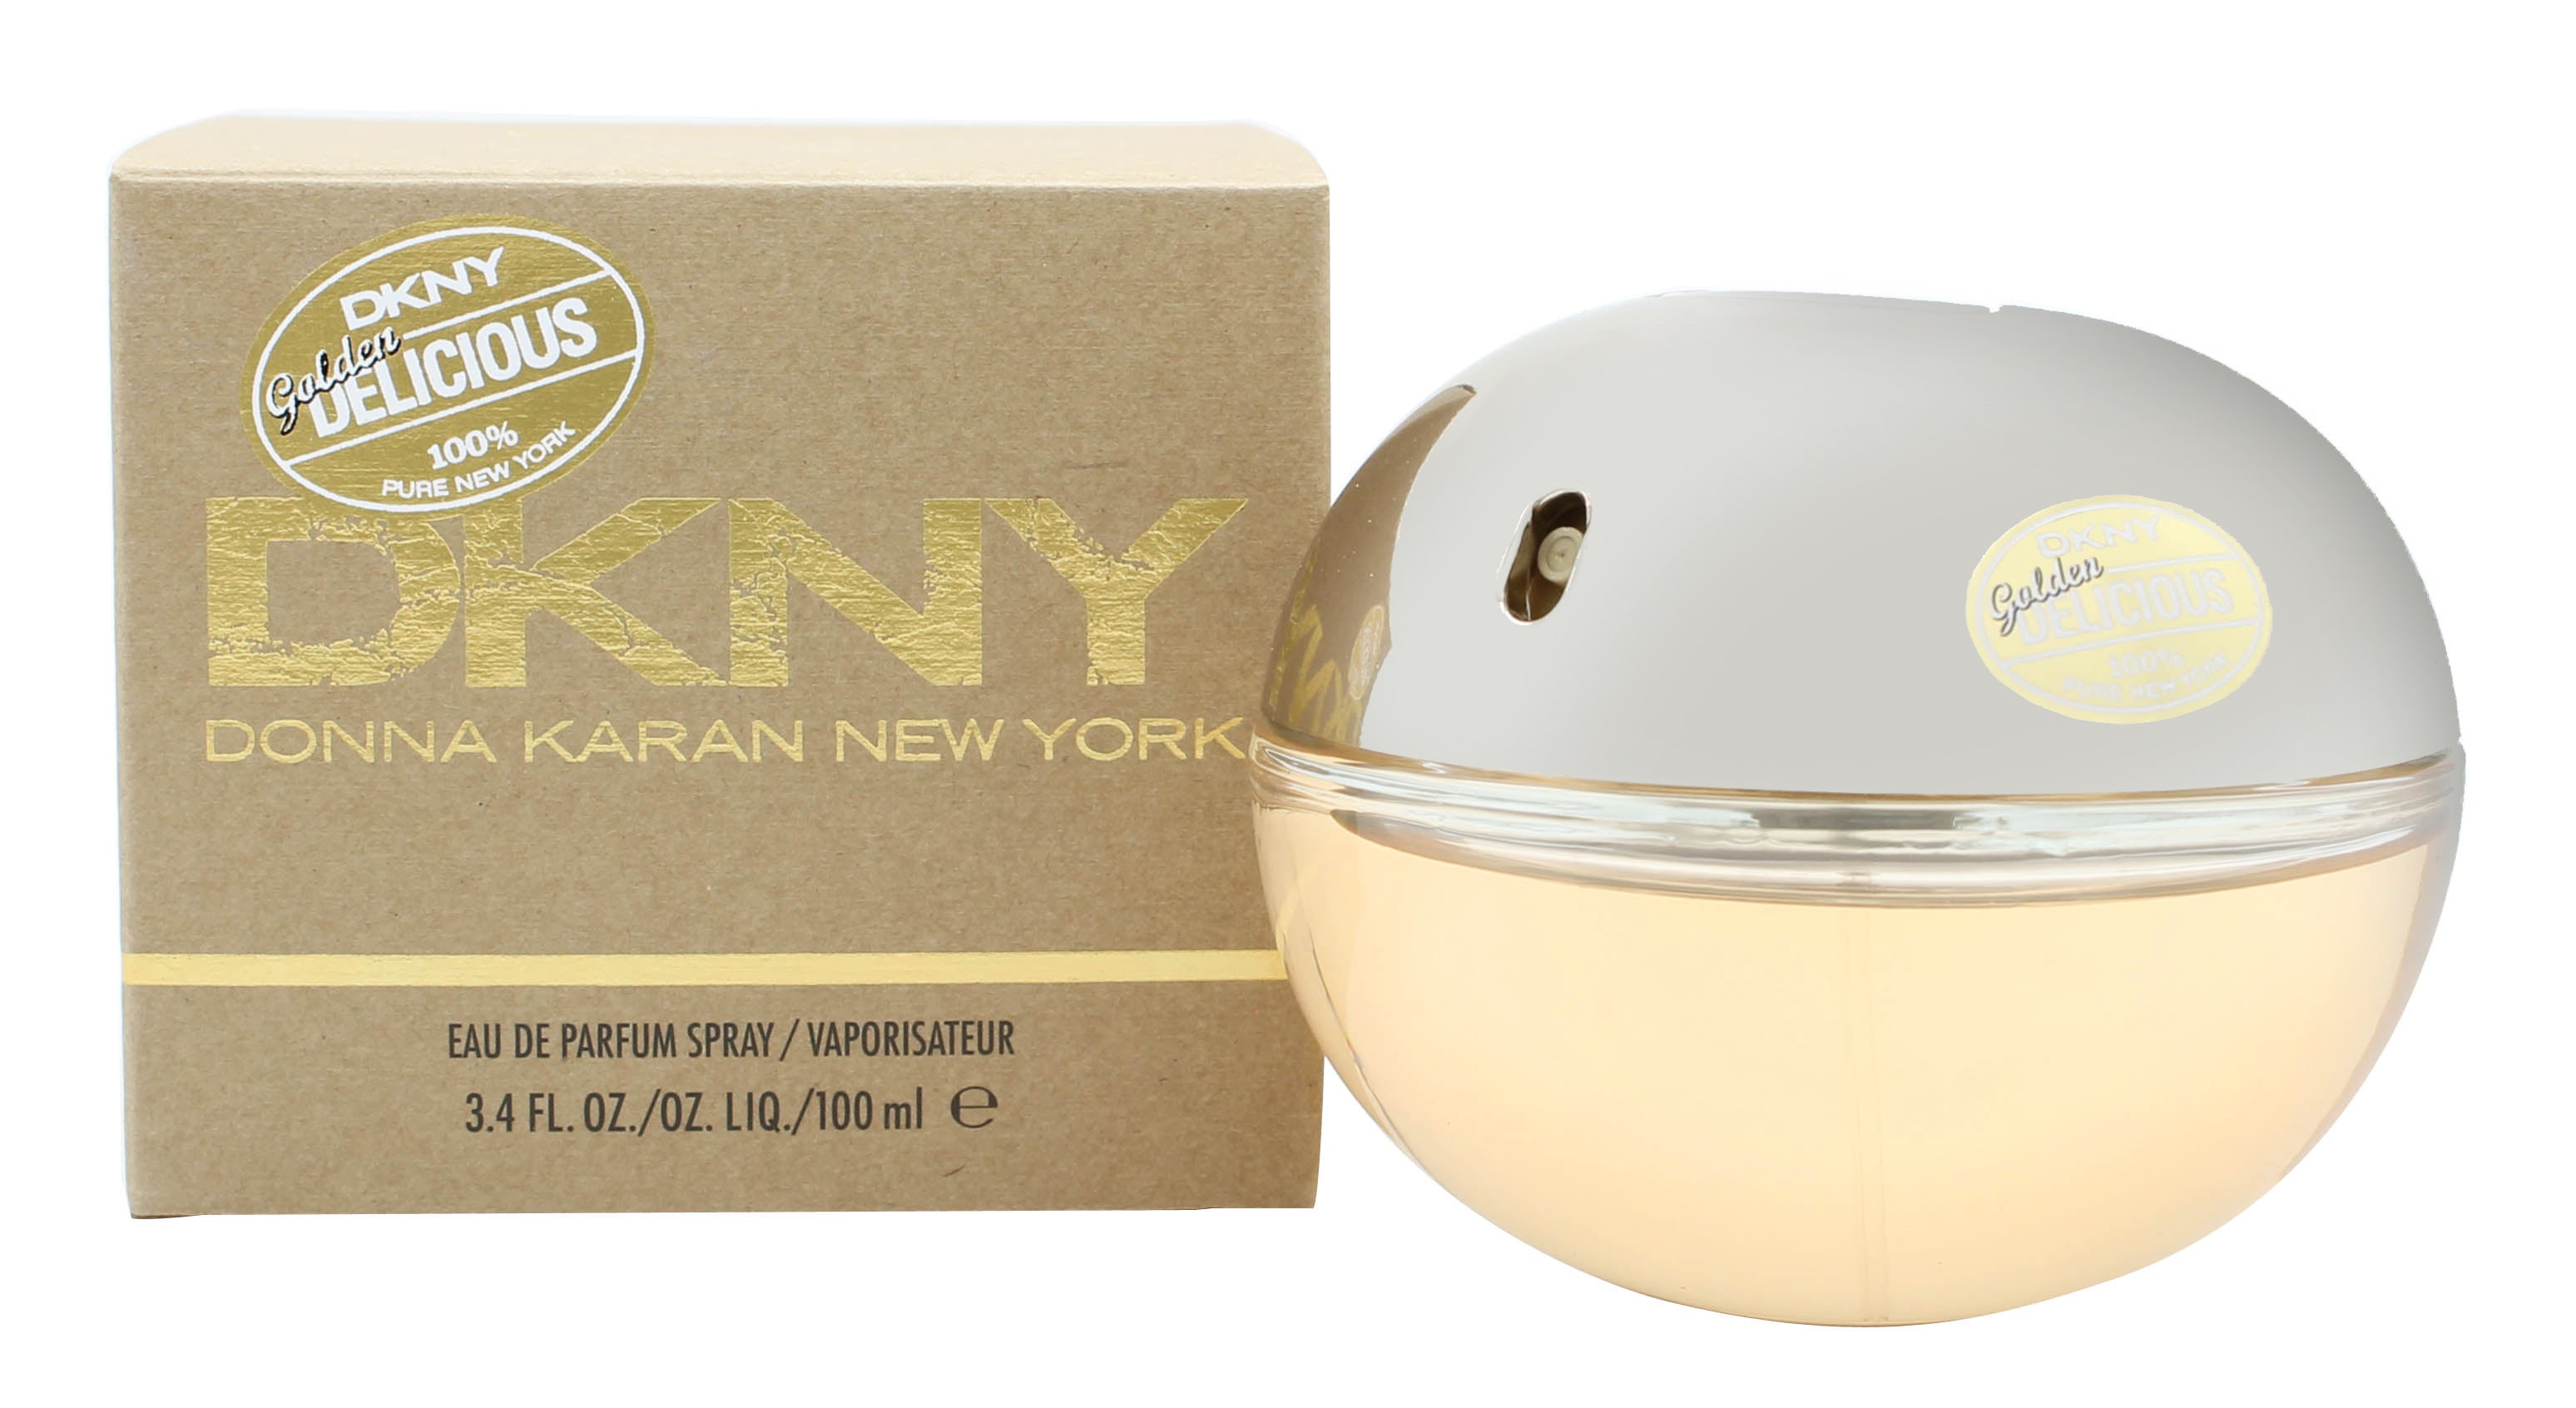 View DKNY Golden Delicious Eau de Parfum 100ml Spray information